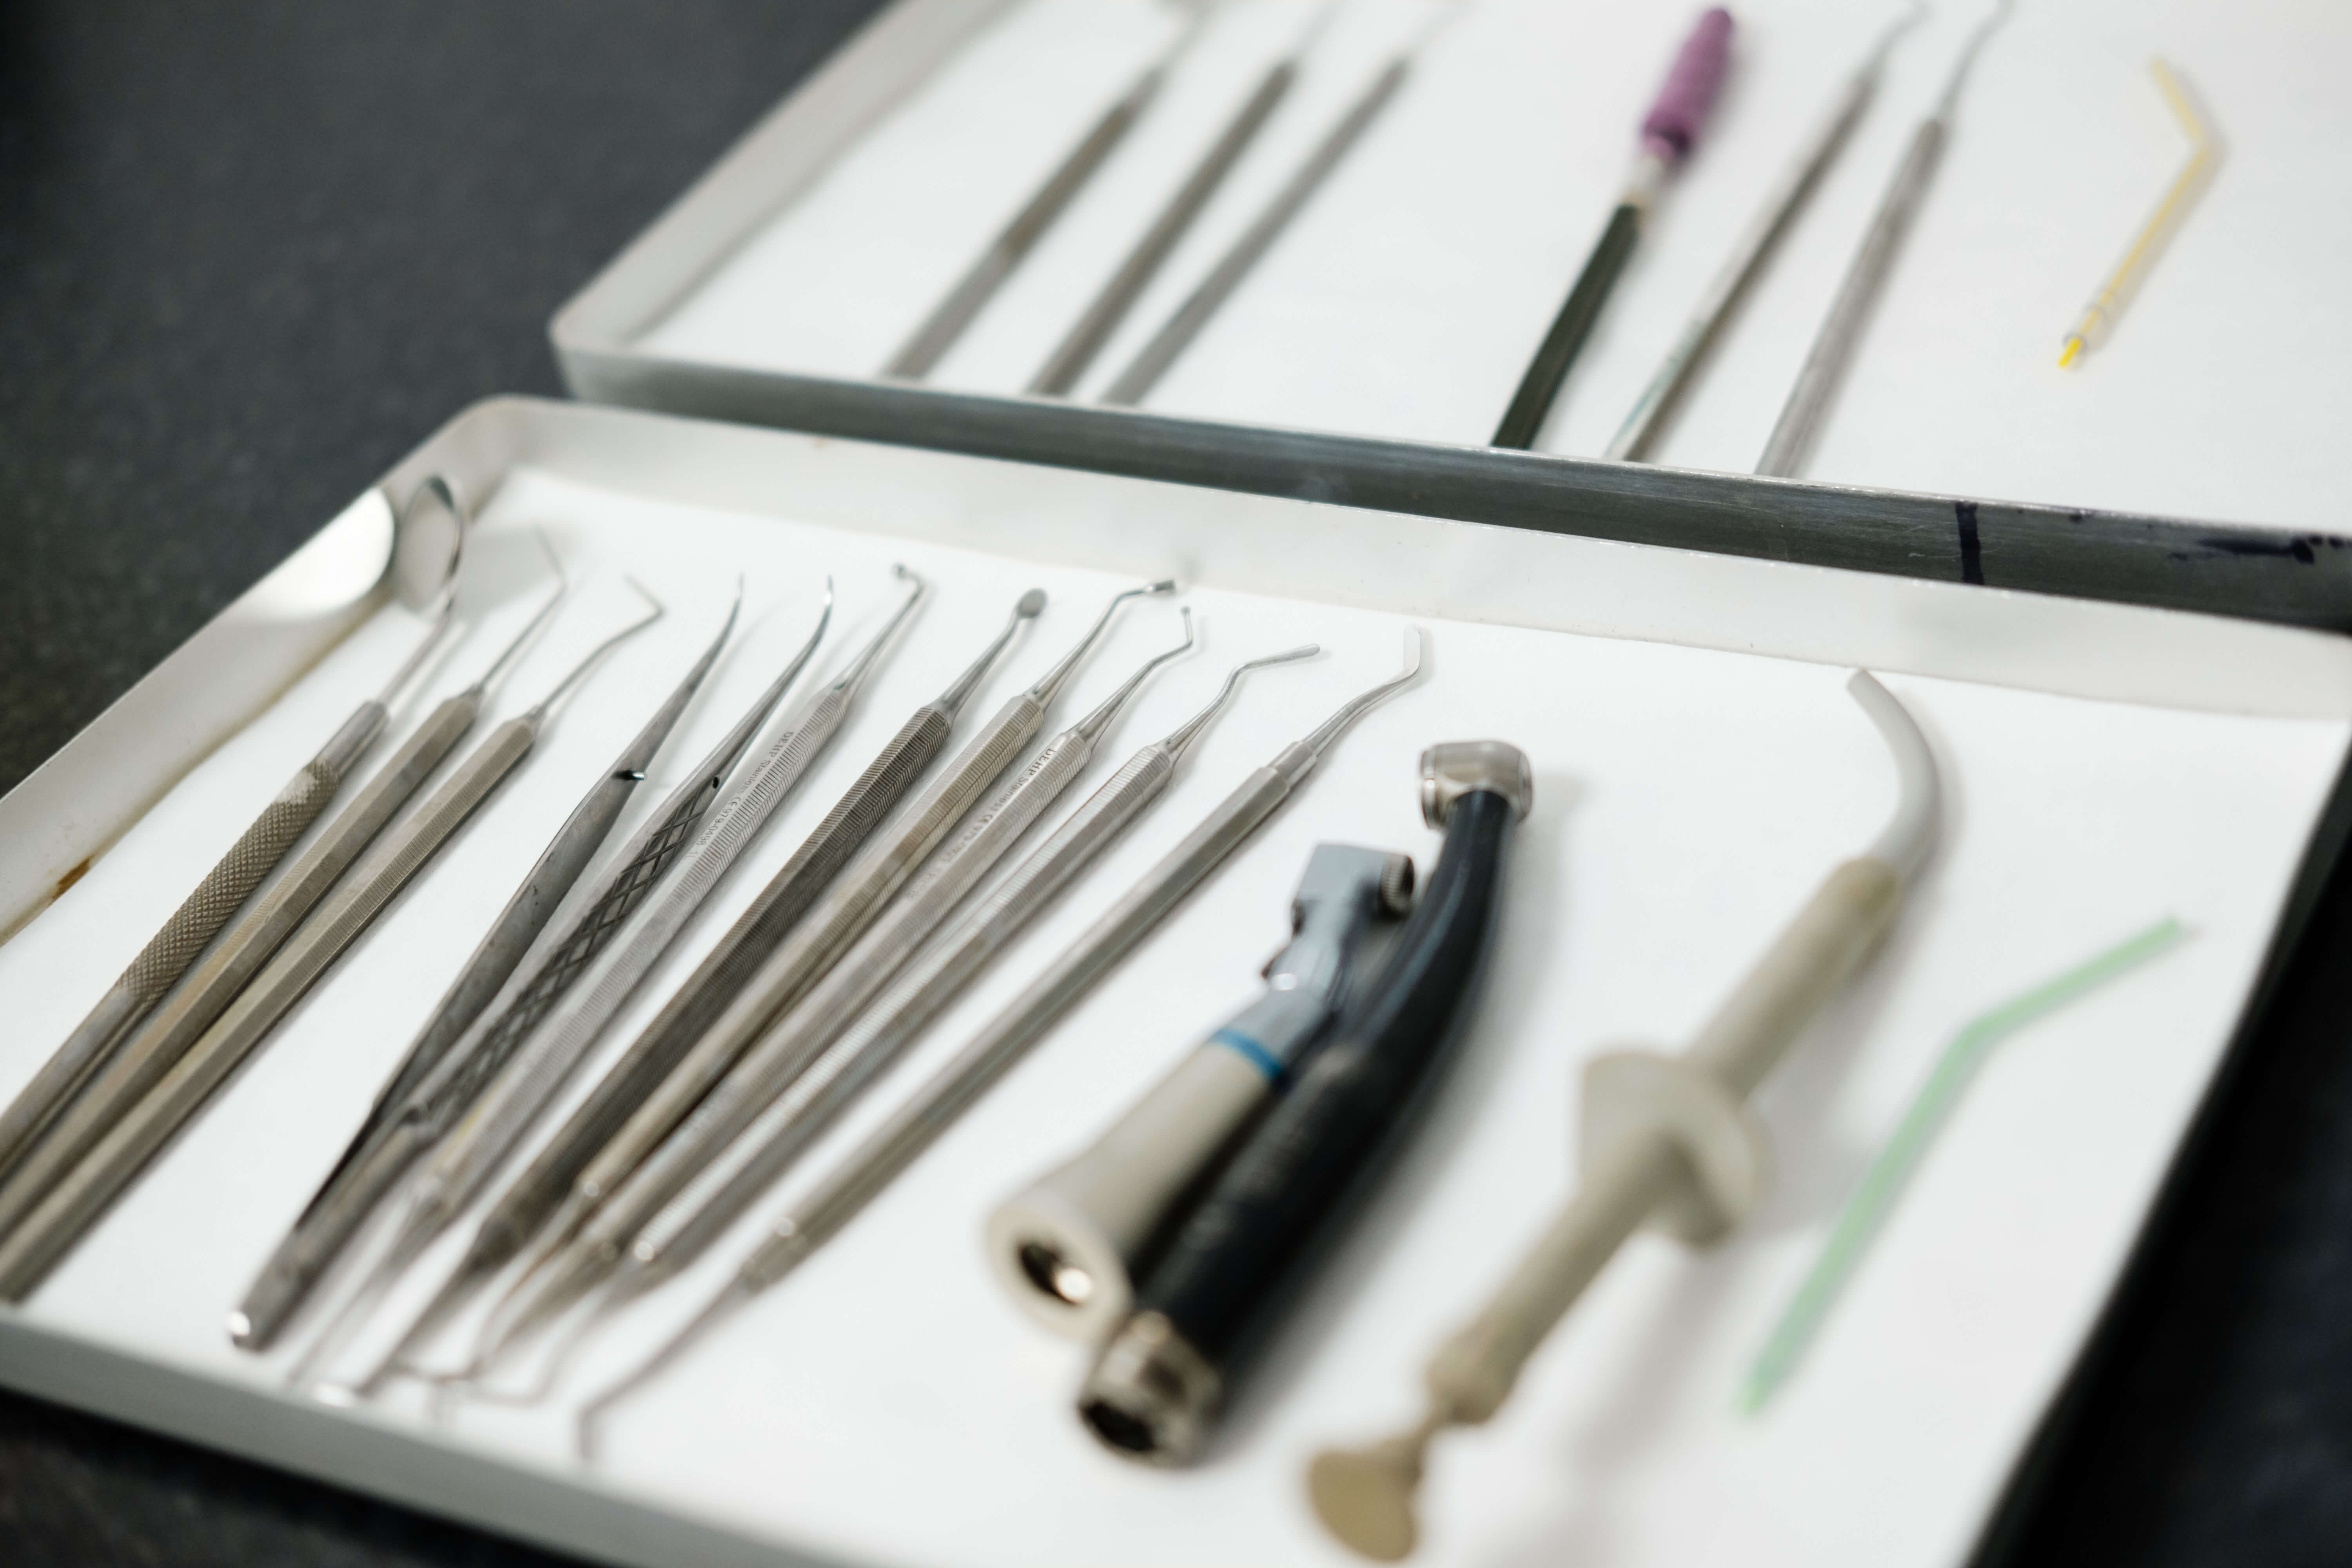 Dental tools in tray